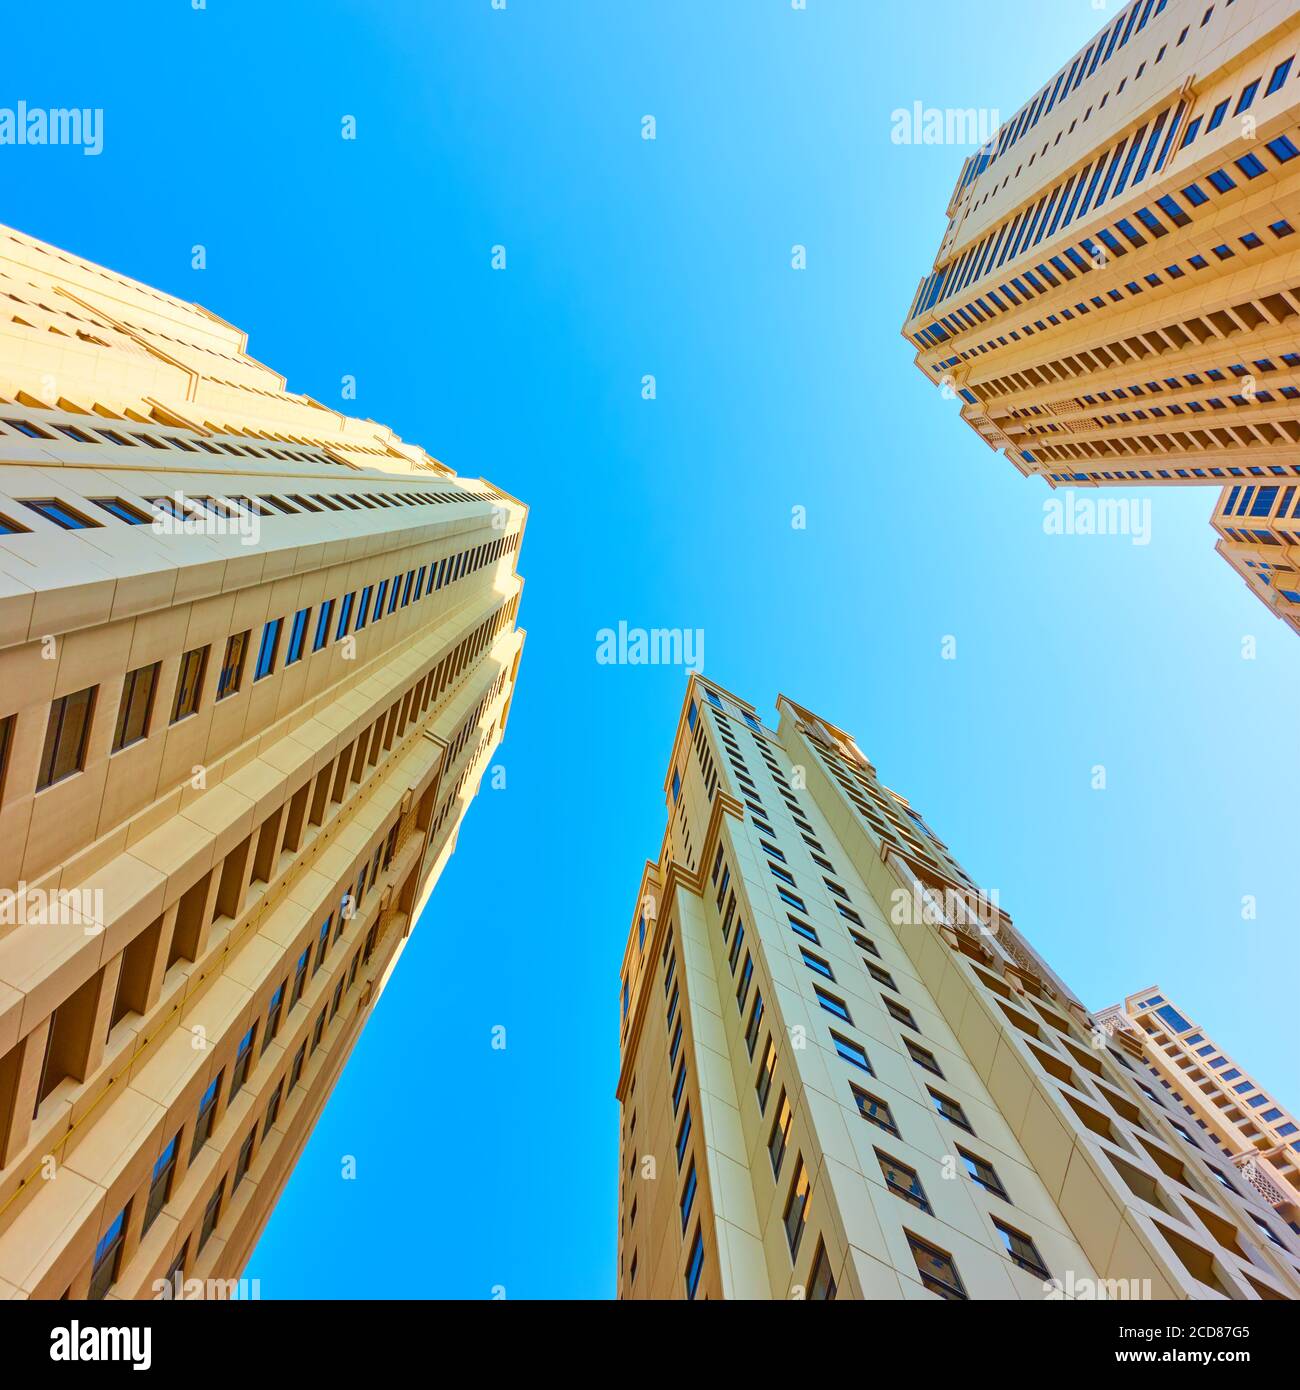 Multistory dwelling buildings against the blue sky, Dubai, UAE. Stock Photo